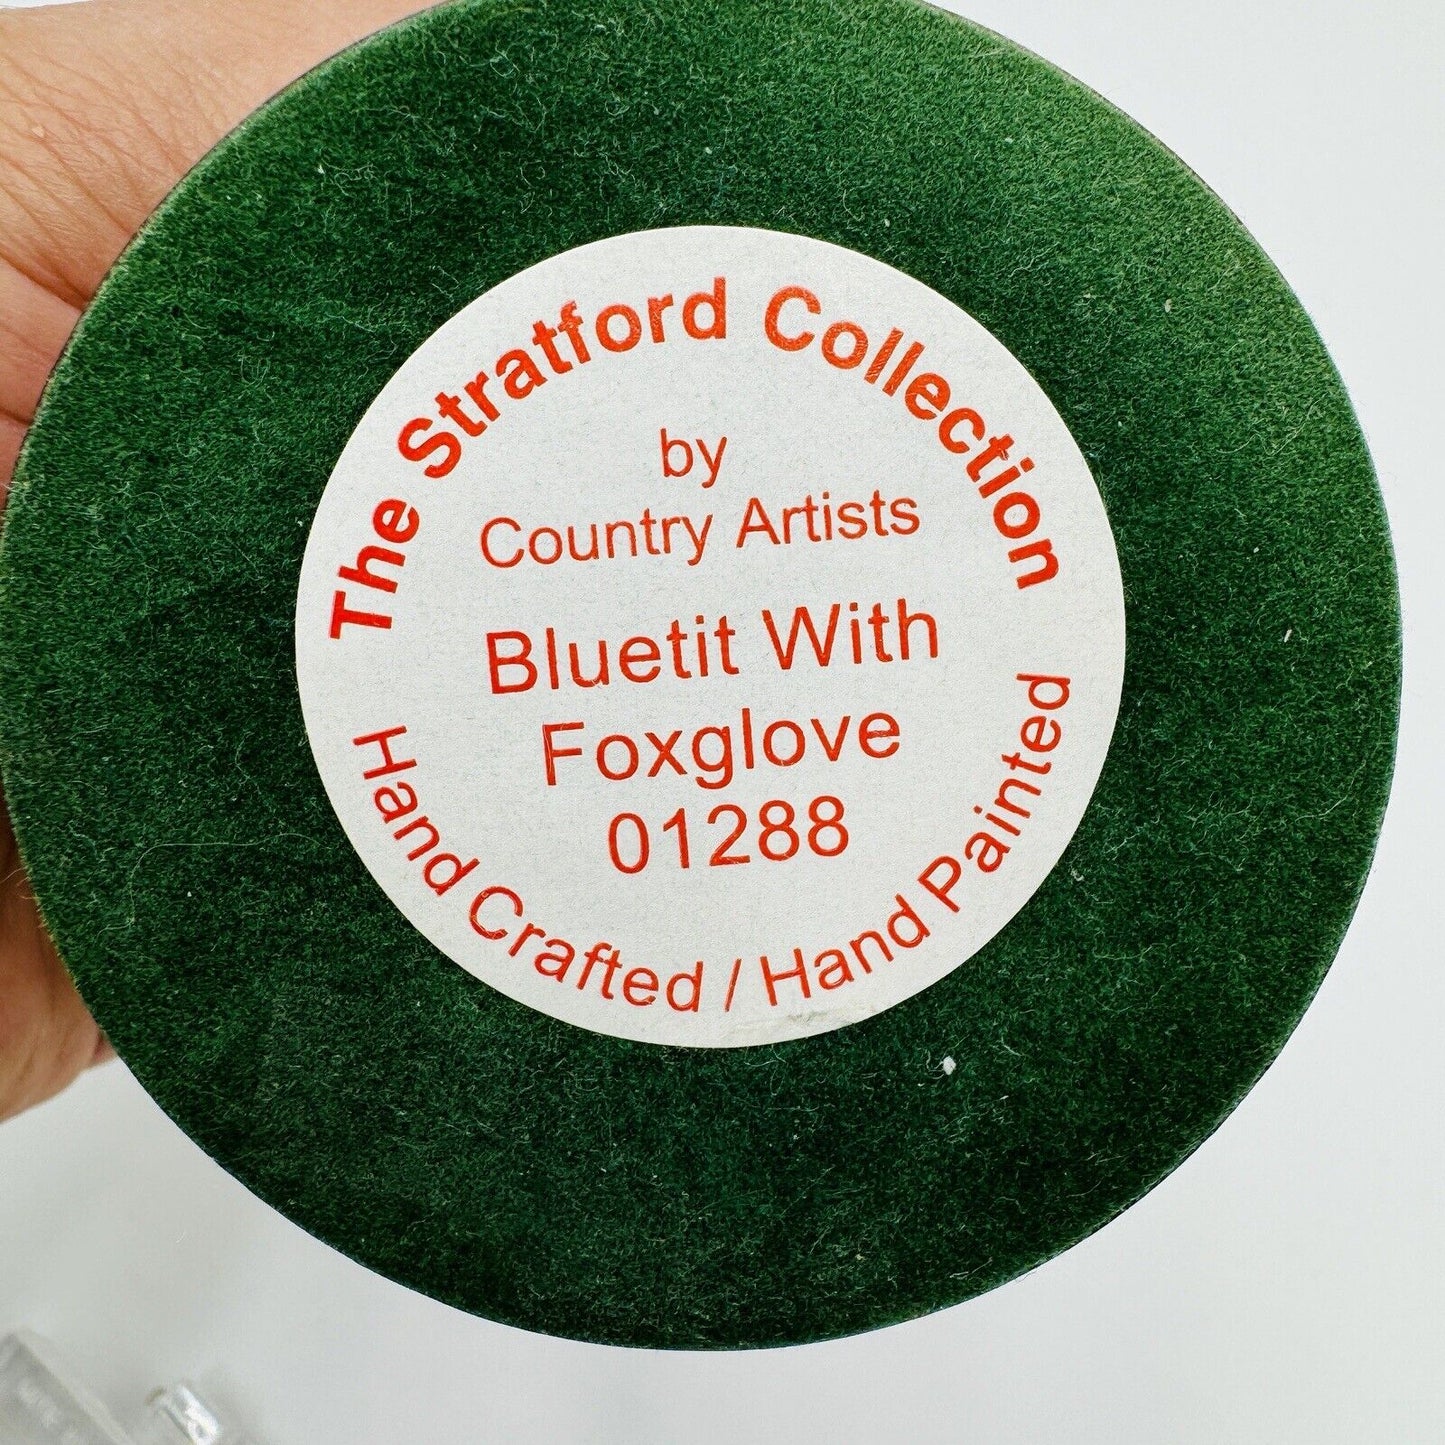 Country Artist Stratford Collection Bluetit With Hand C Foxglove 01288 Figurine